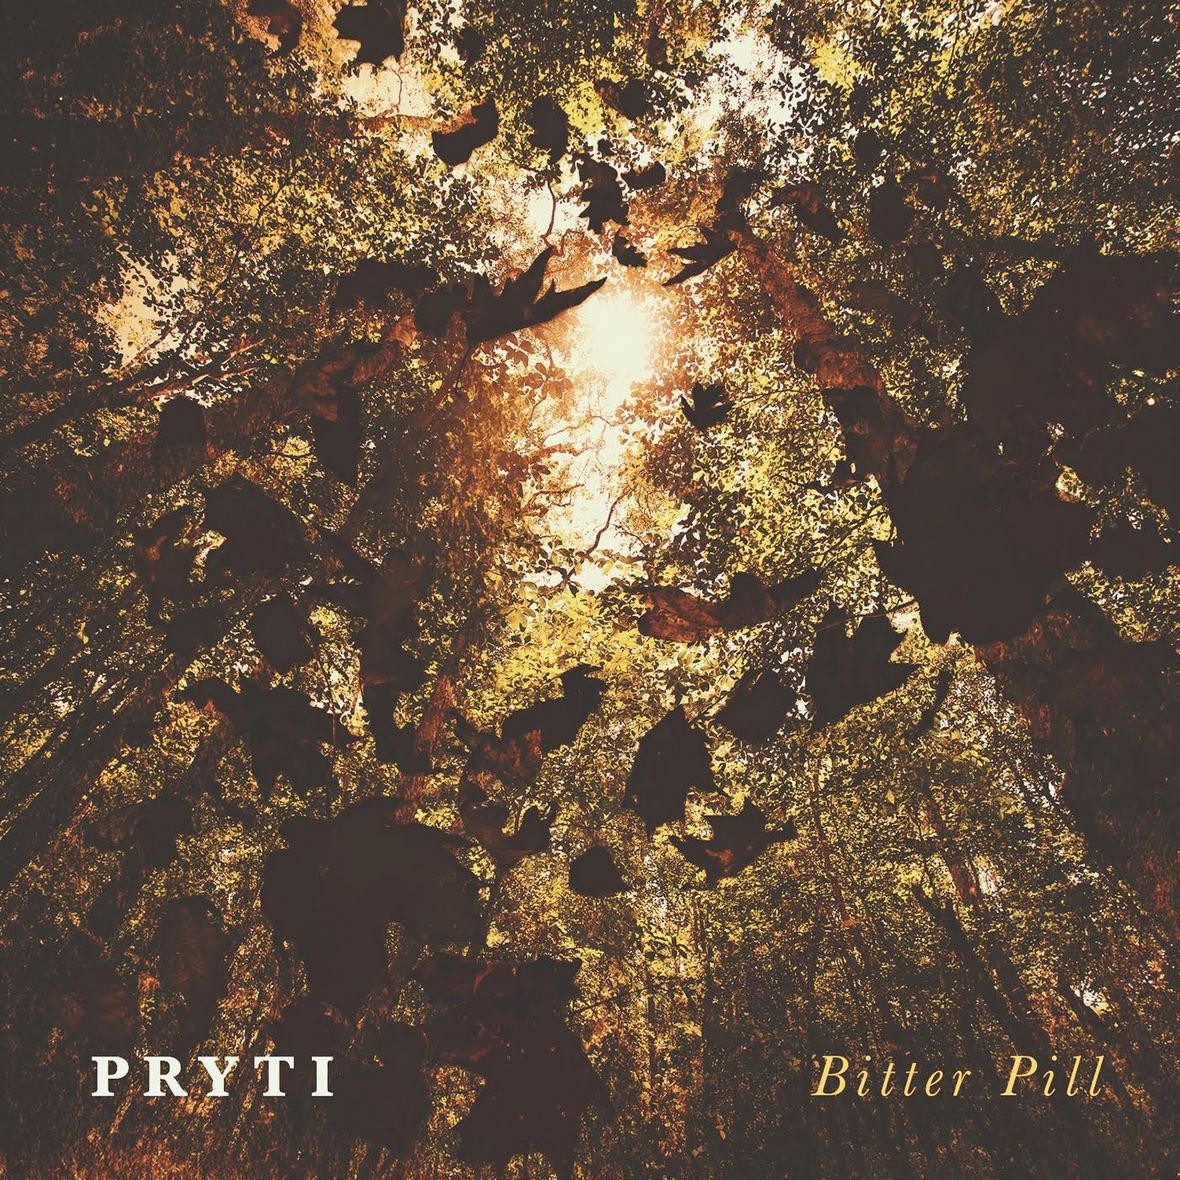 Pryti Releases "Bitter Pill" Music Video